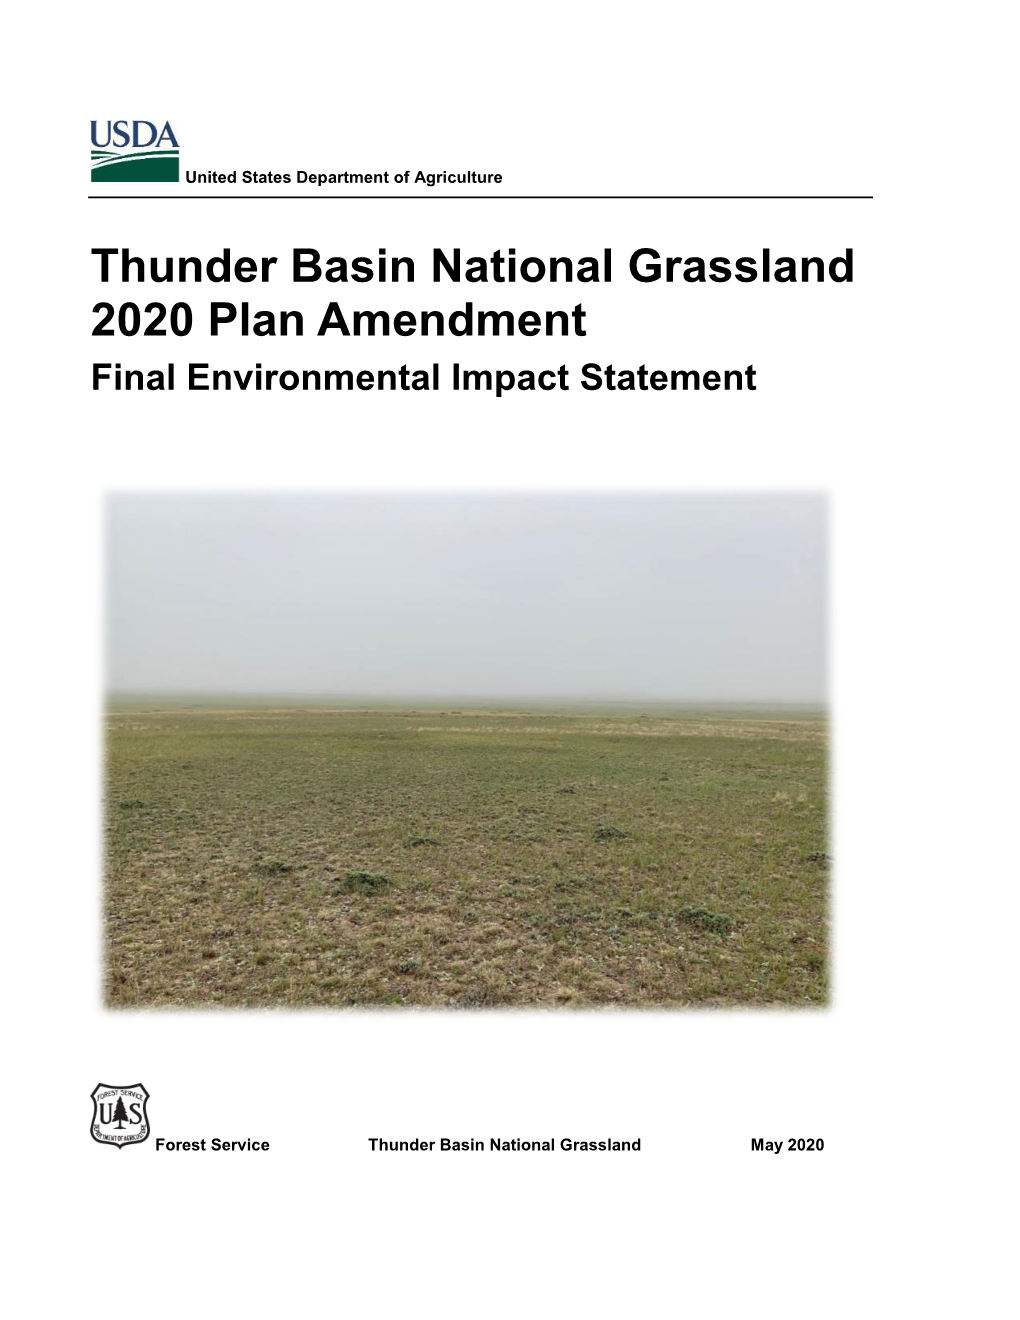 Thunder Basin National Grassland 2020 Plan Amendment Final Environmental Impact Statement